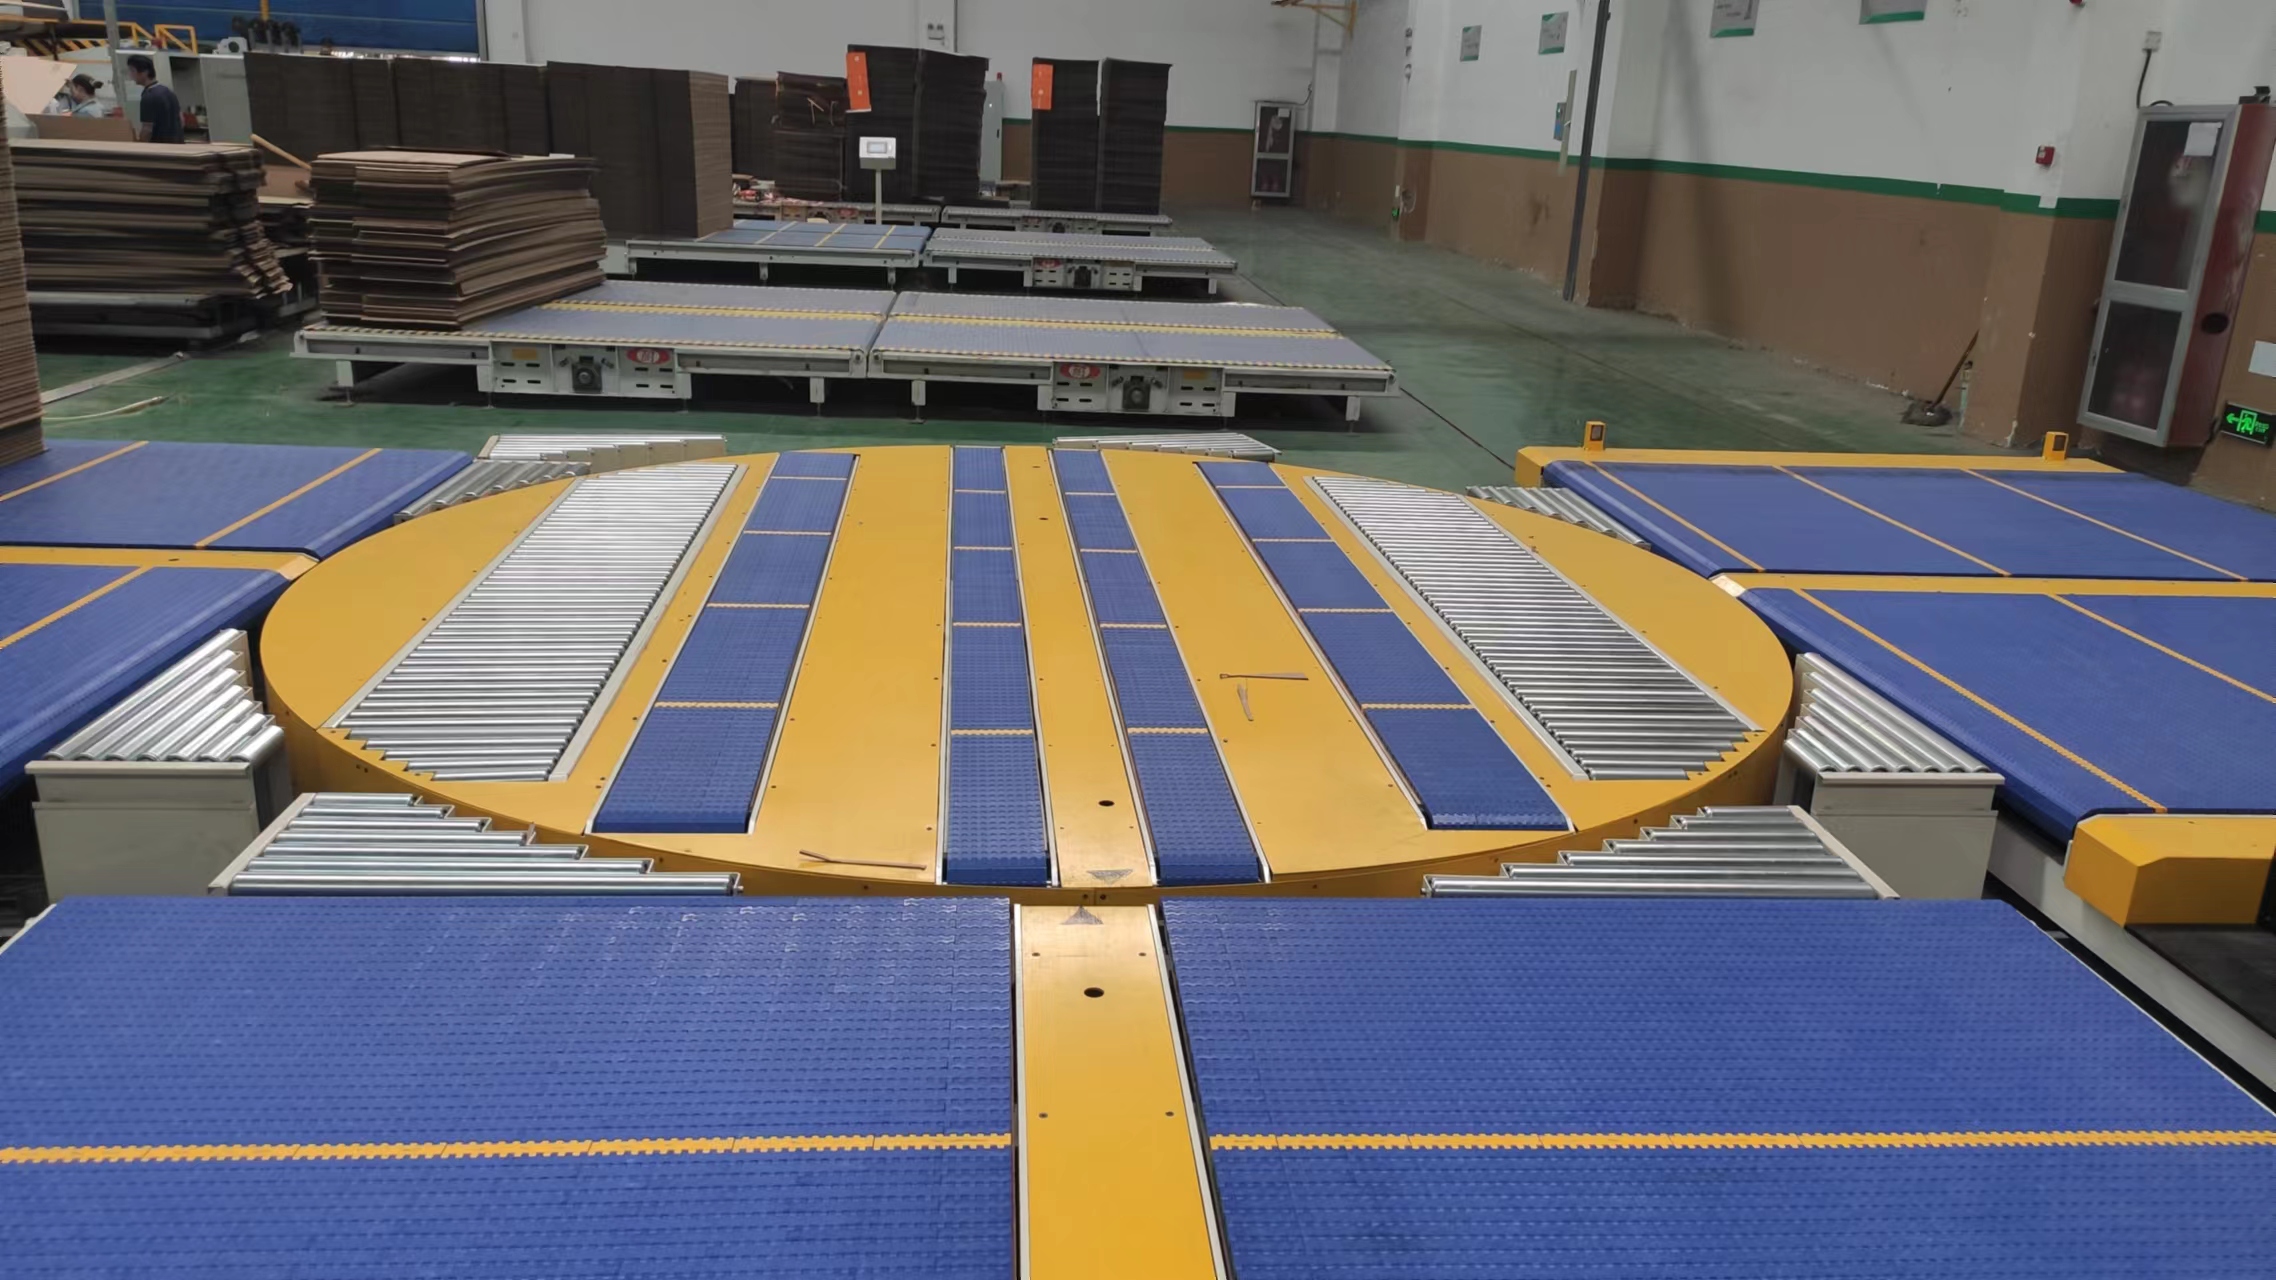 Nws pib Modular siv Conveyor system Plastics Conveyor system Cardboard Conveyor System